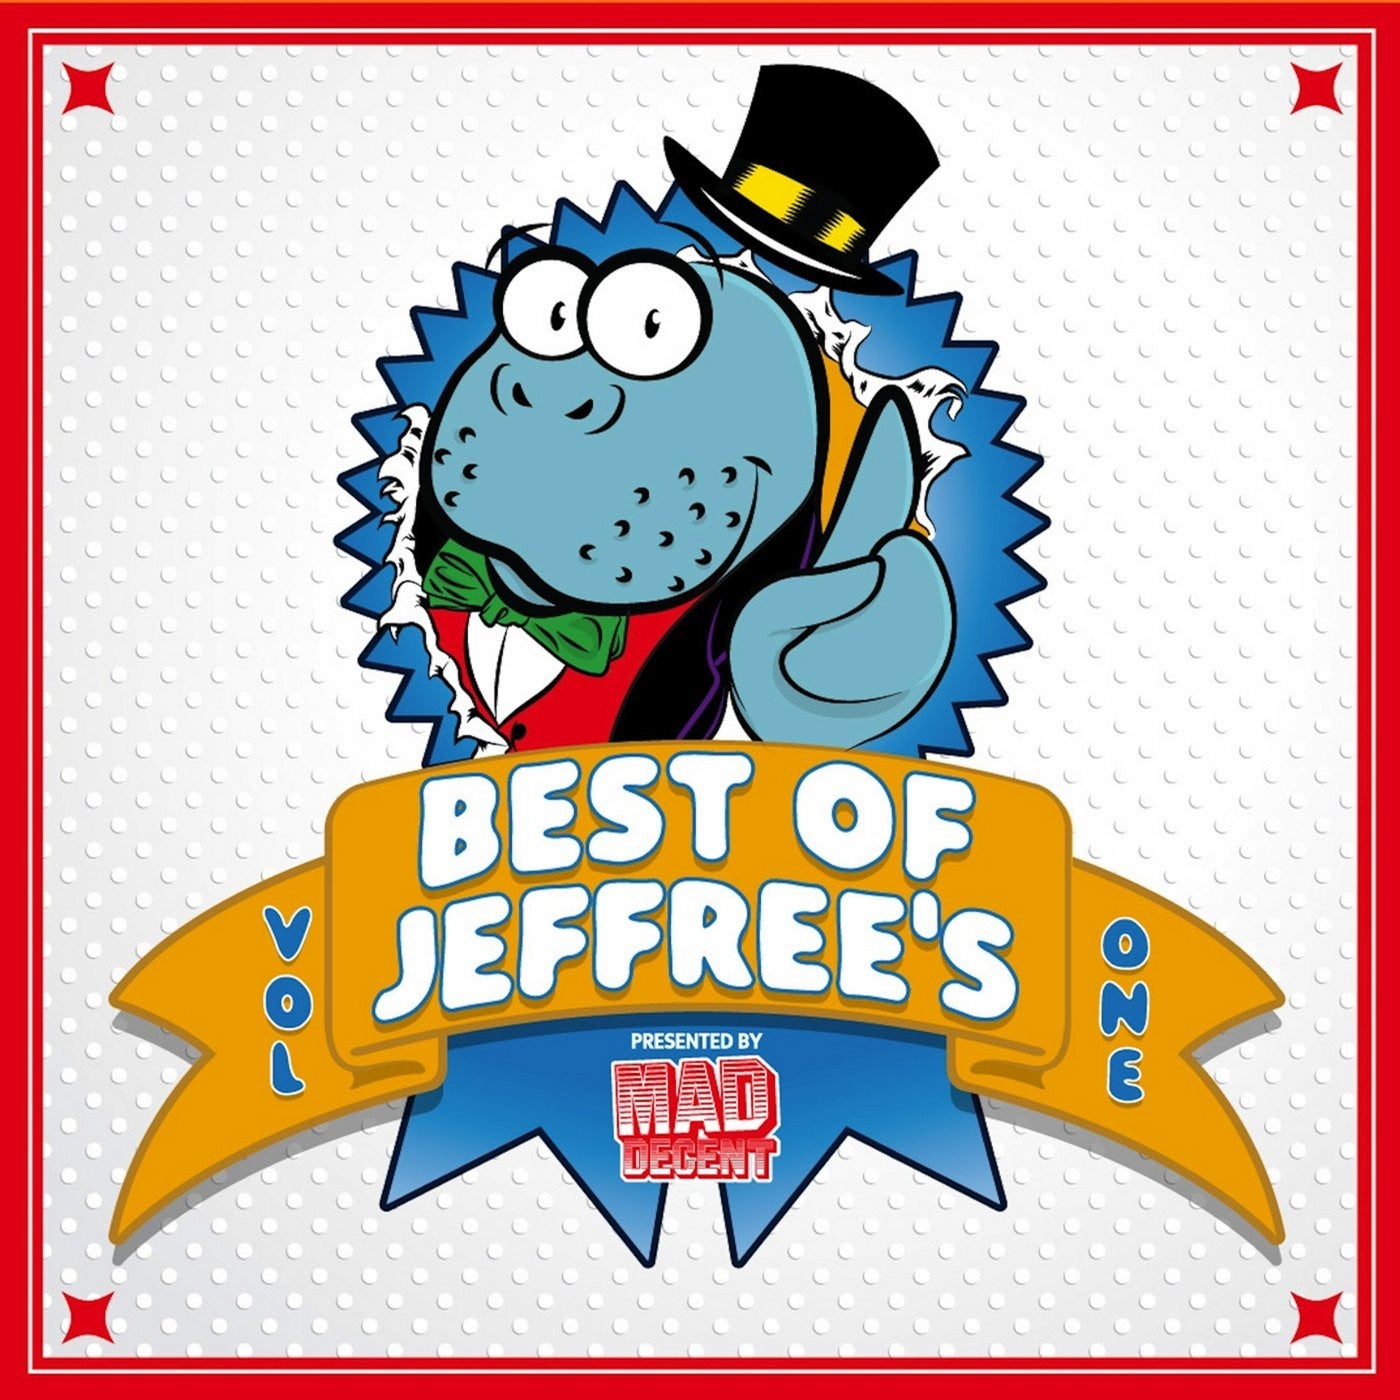 Best of Jeffree's (Vol. 1)